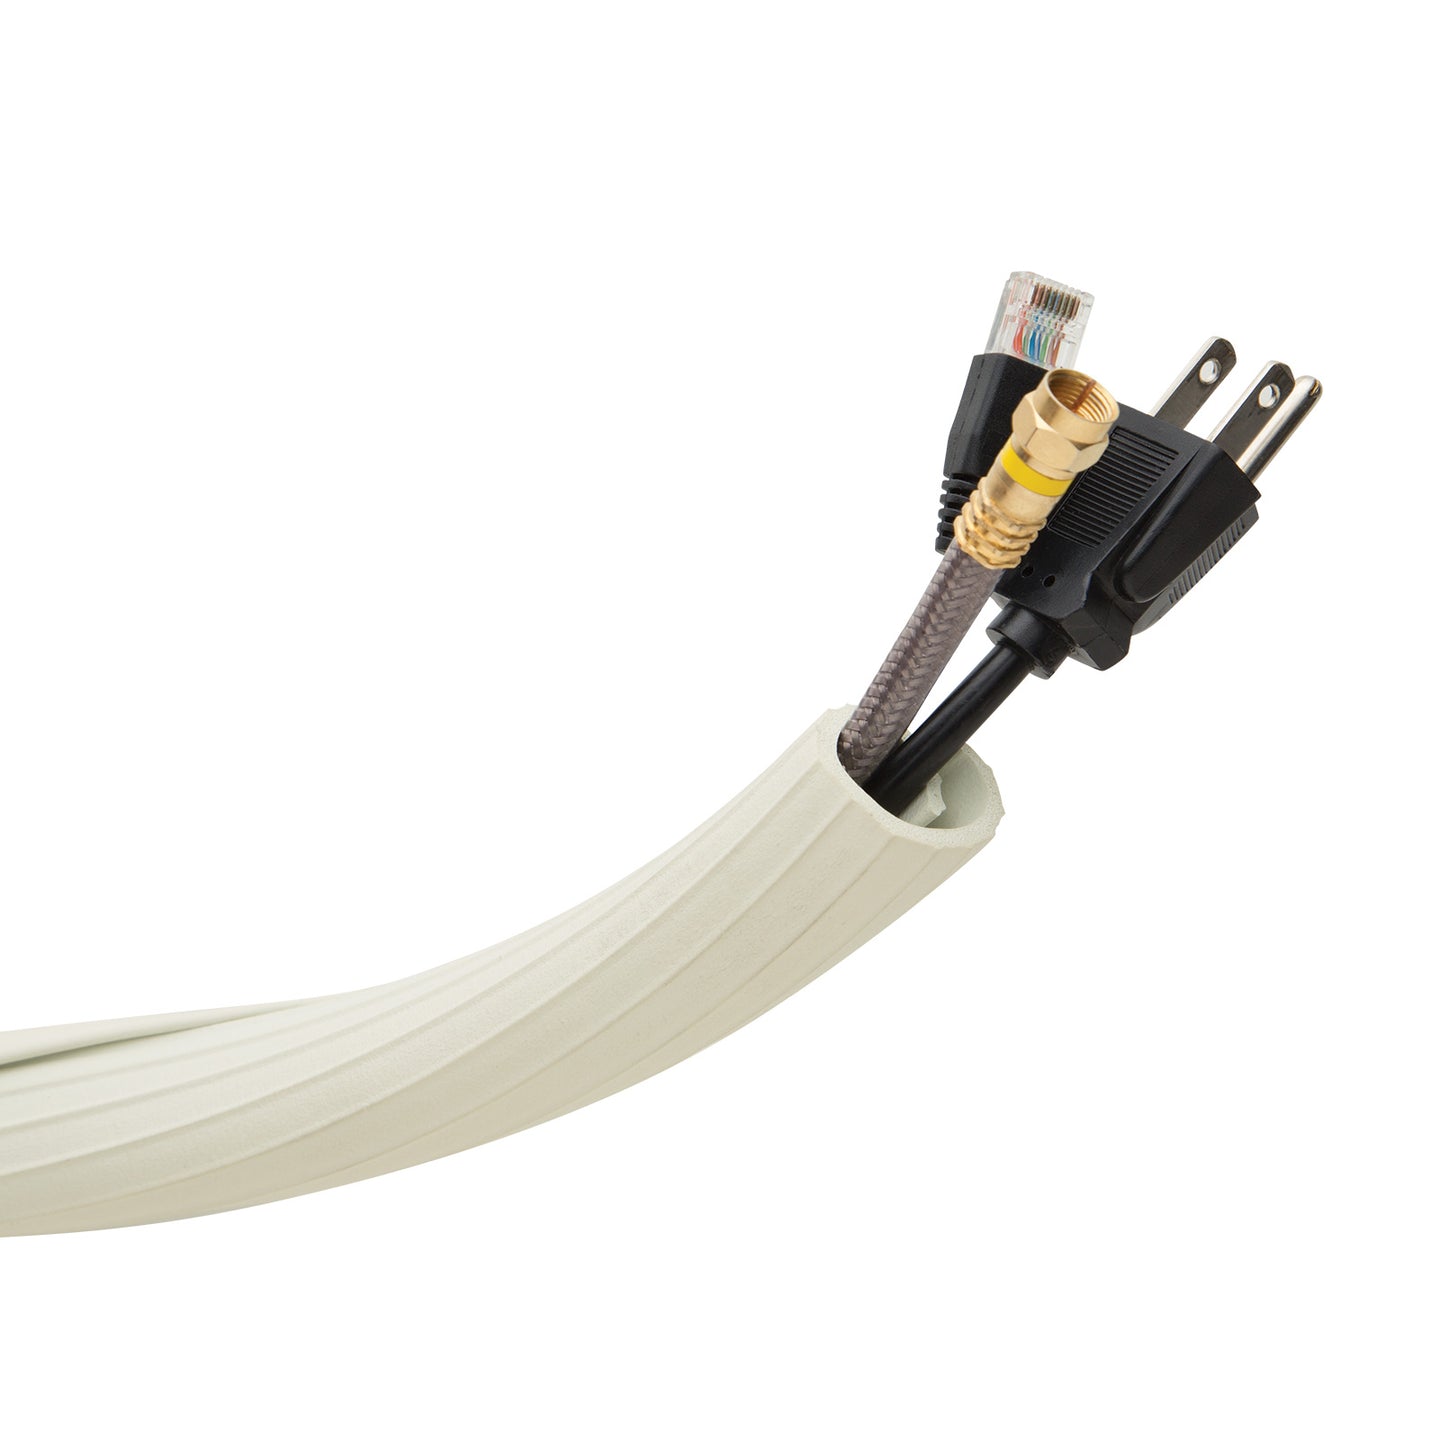 Flexi Cable Wrap – UT WIRE